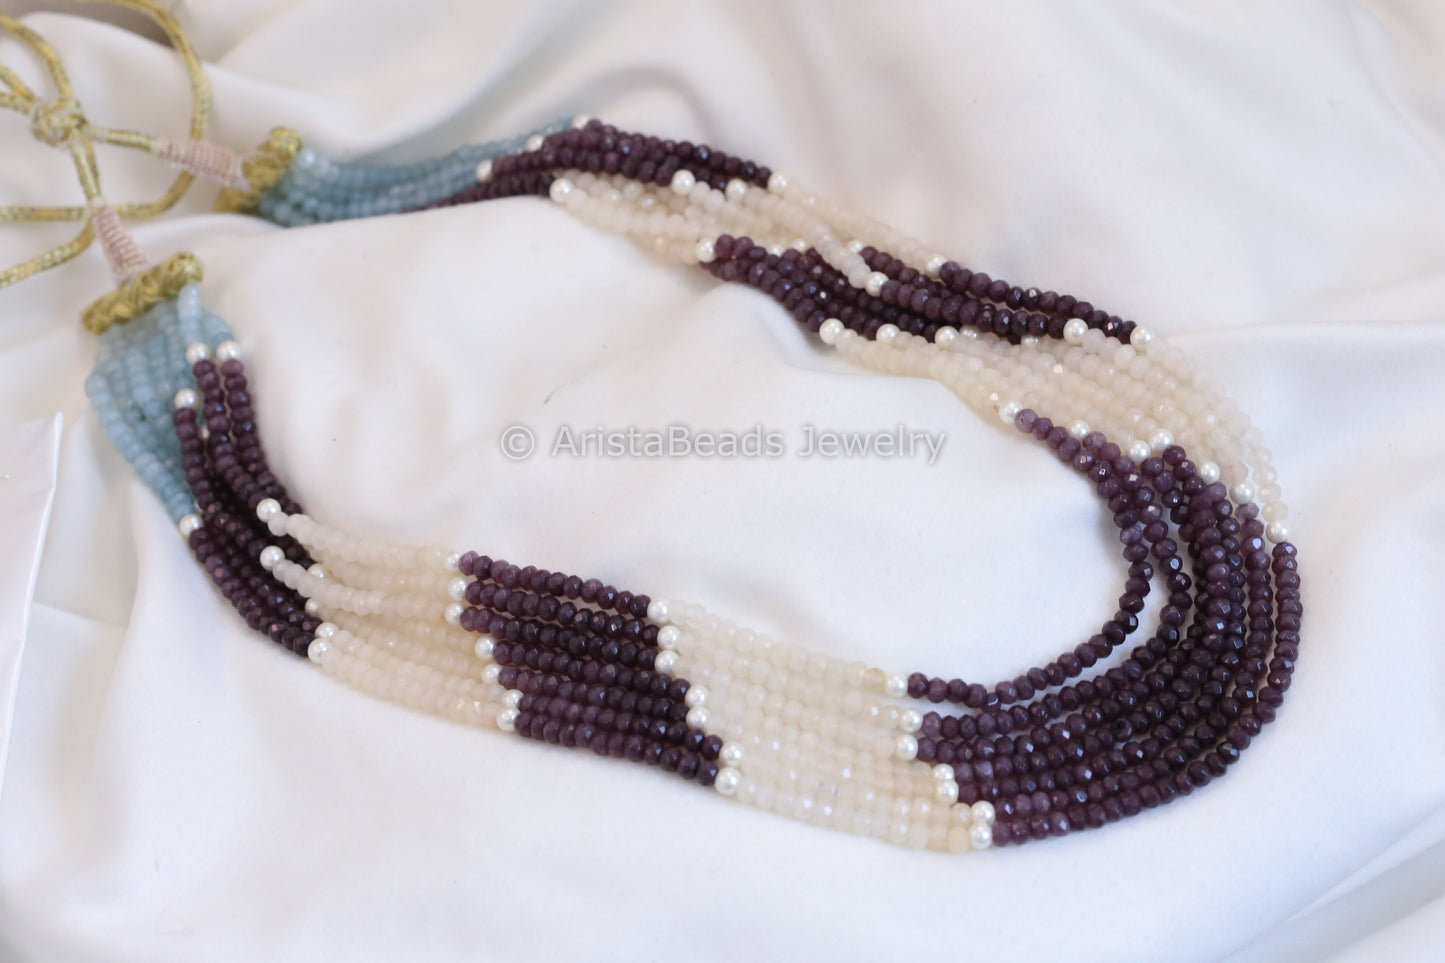 7 Strand Semiprecious Beads Necklace - Style 5